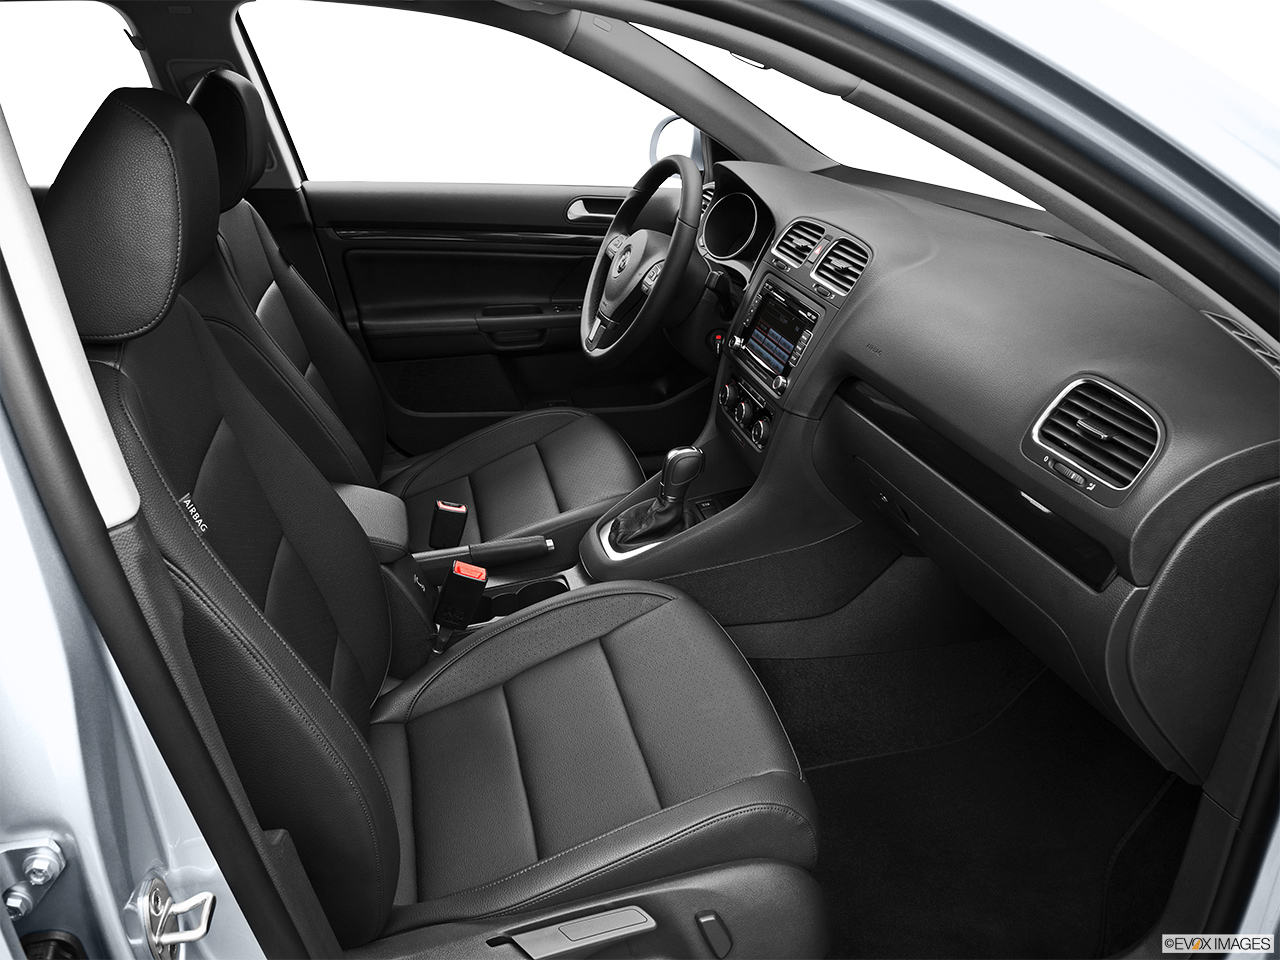 2013 Volkswagen Jetta SportWagen TDI Passenger seat. 